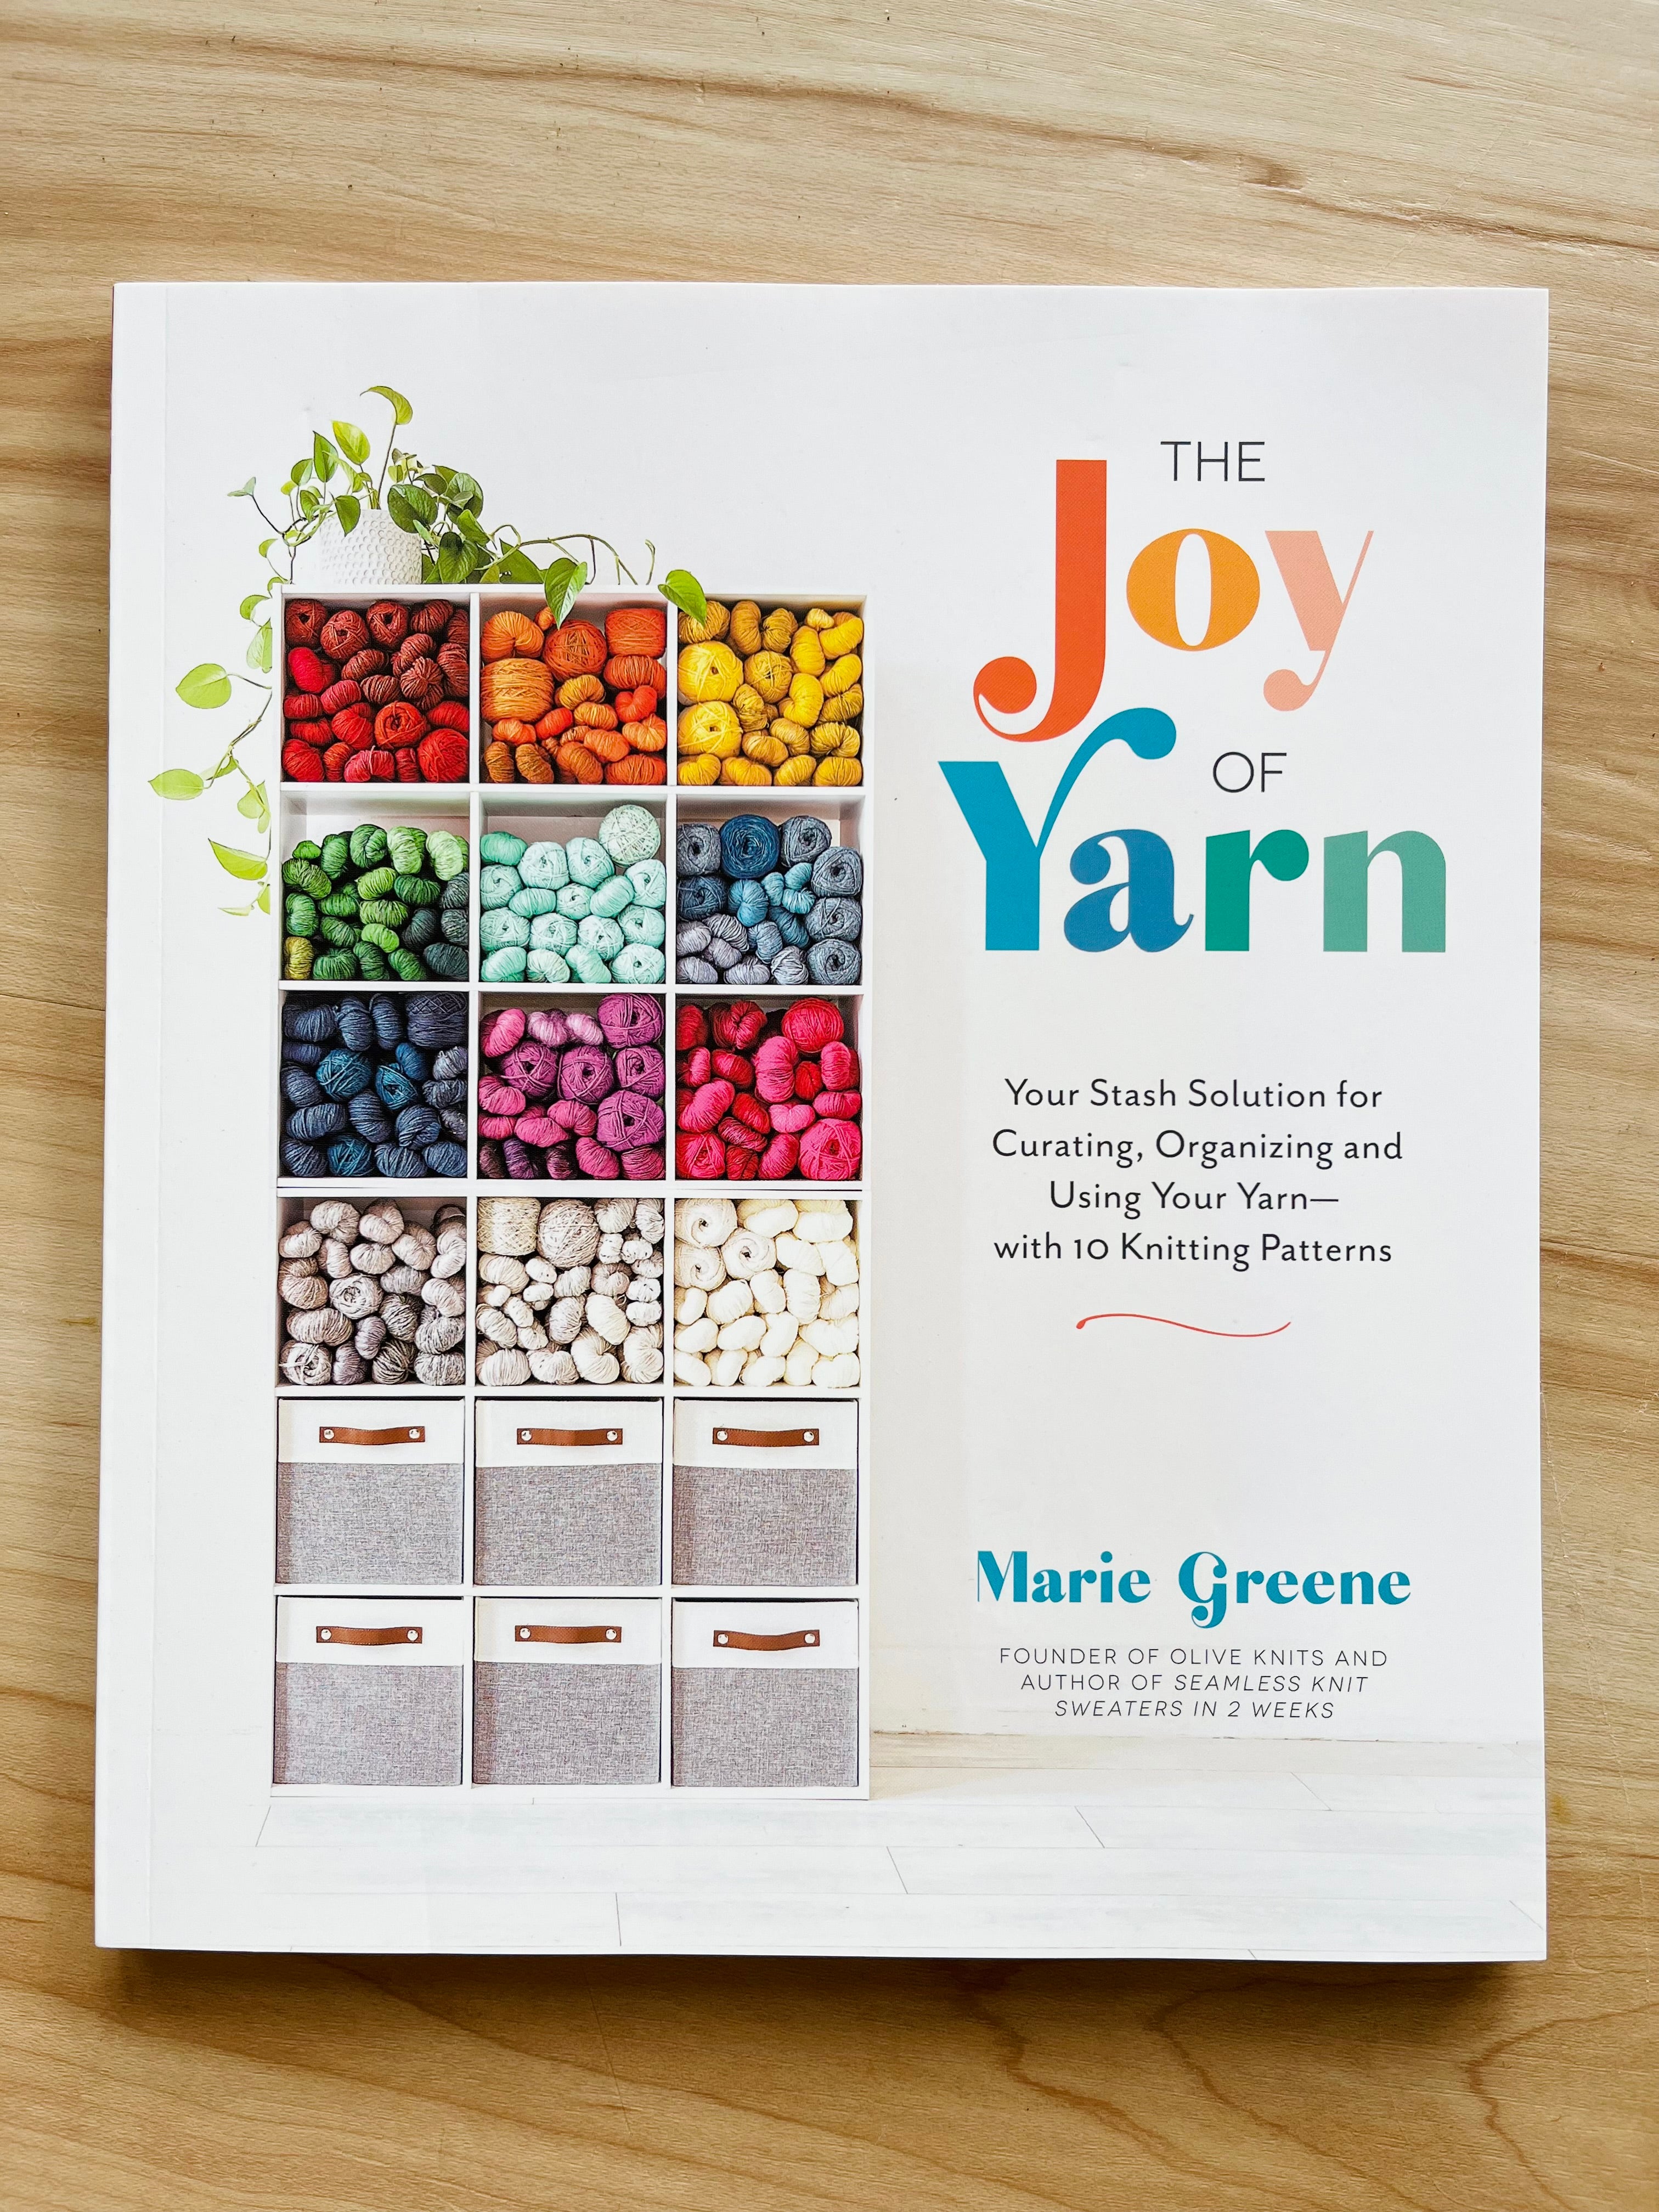 The Joy of Yarn by Marie Greene